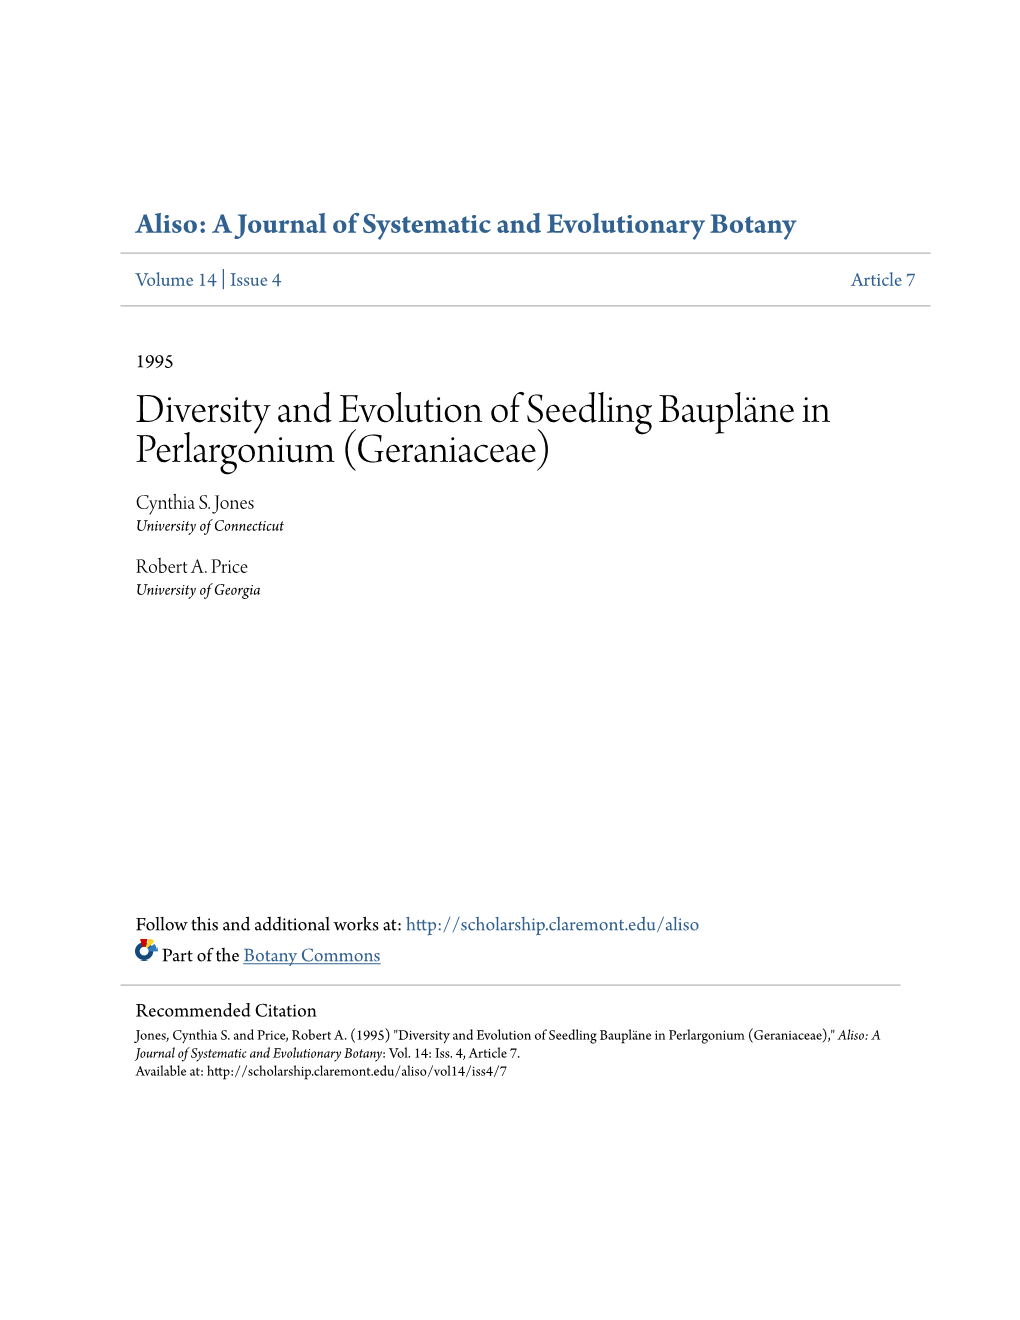 Diversity and Evolution of Seedling Baupläne in Perlargonium (Geraniaceae) Cynthia S